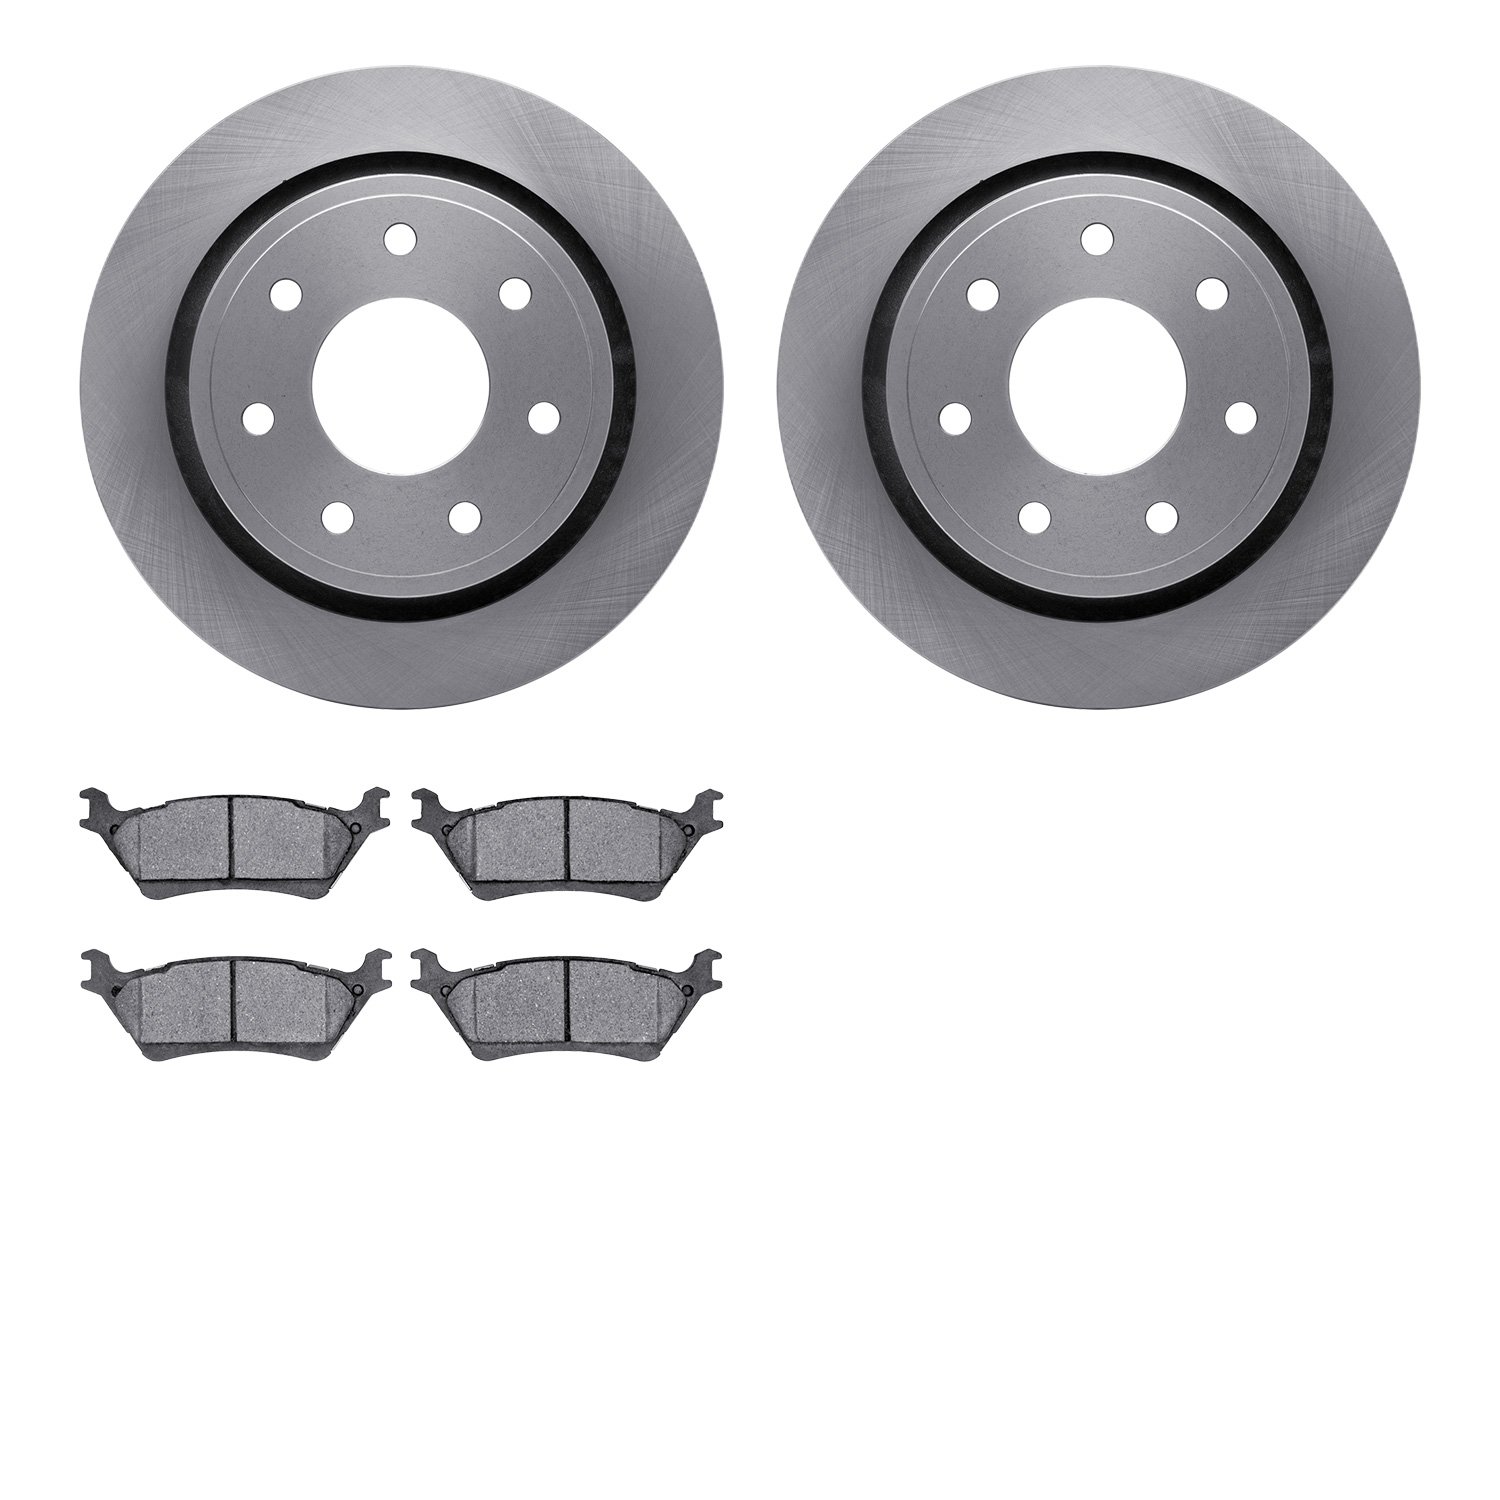 6302-54208 Brake Rotors with 3000-Series Ceramic Brake Pads Kit, 2012-2014 Ford/Lincoln/Mercury/Mazda, Position: Rear